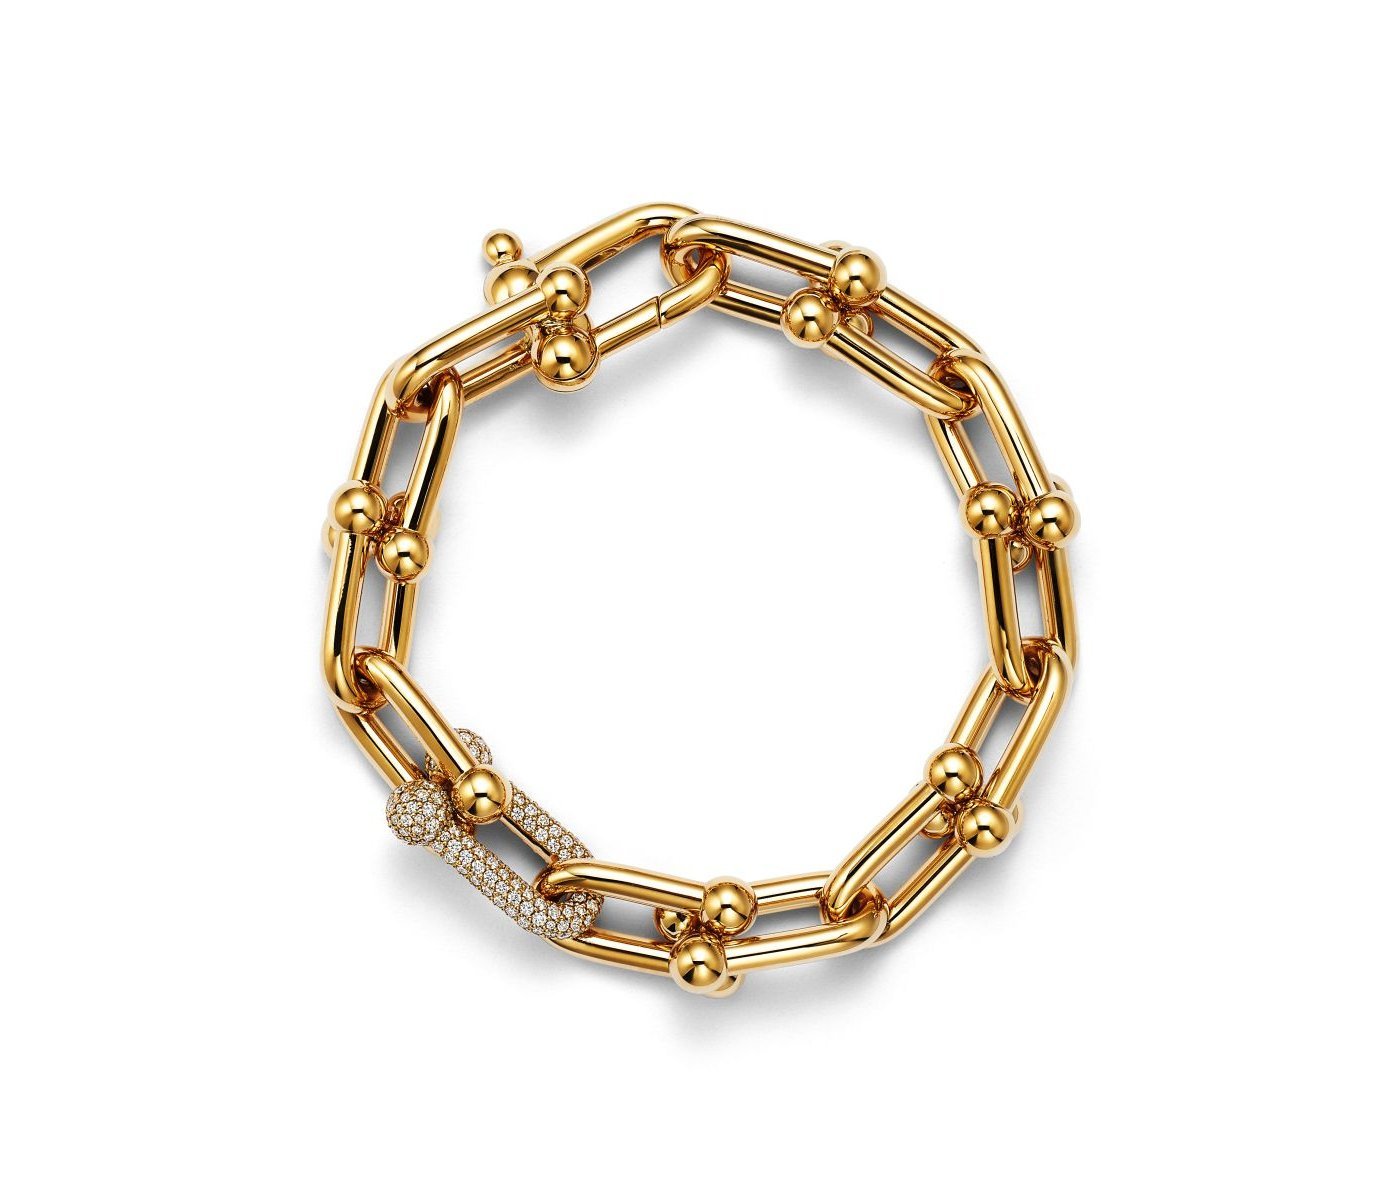 Bracelet by Tiffany & Co.